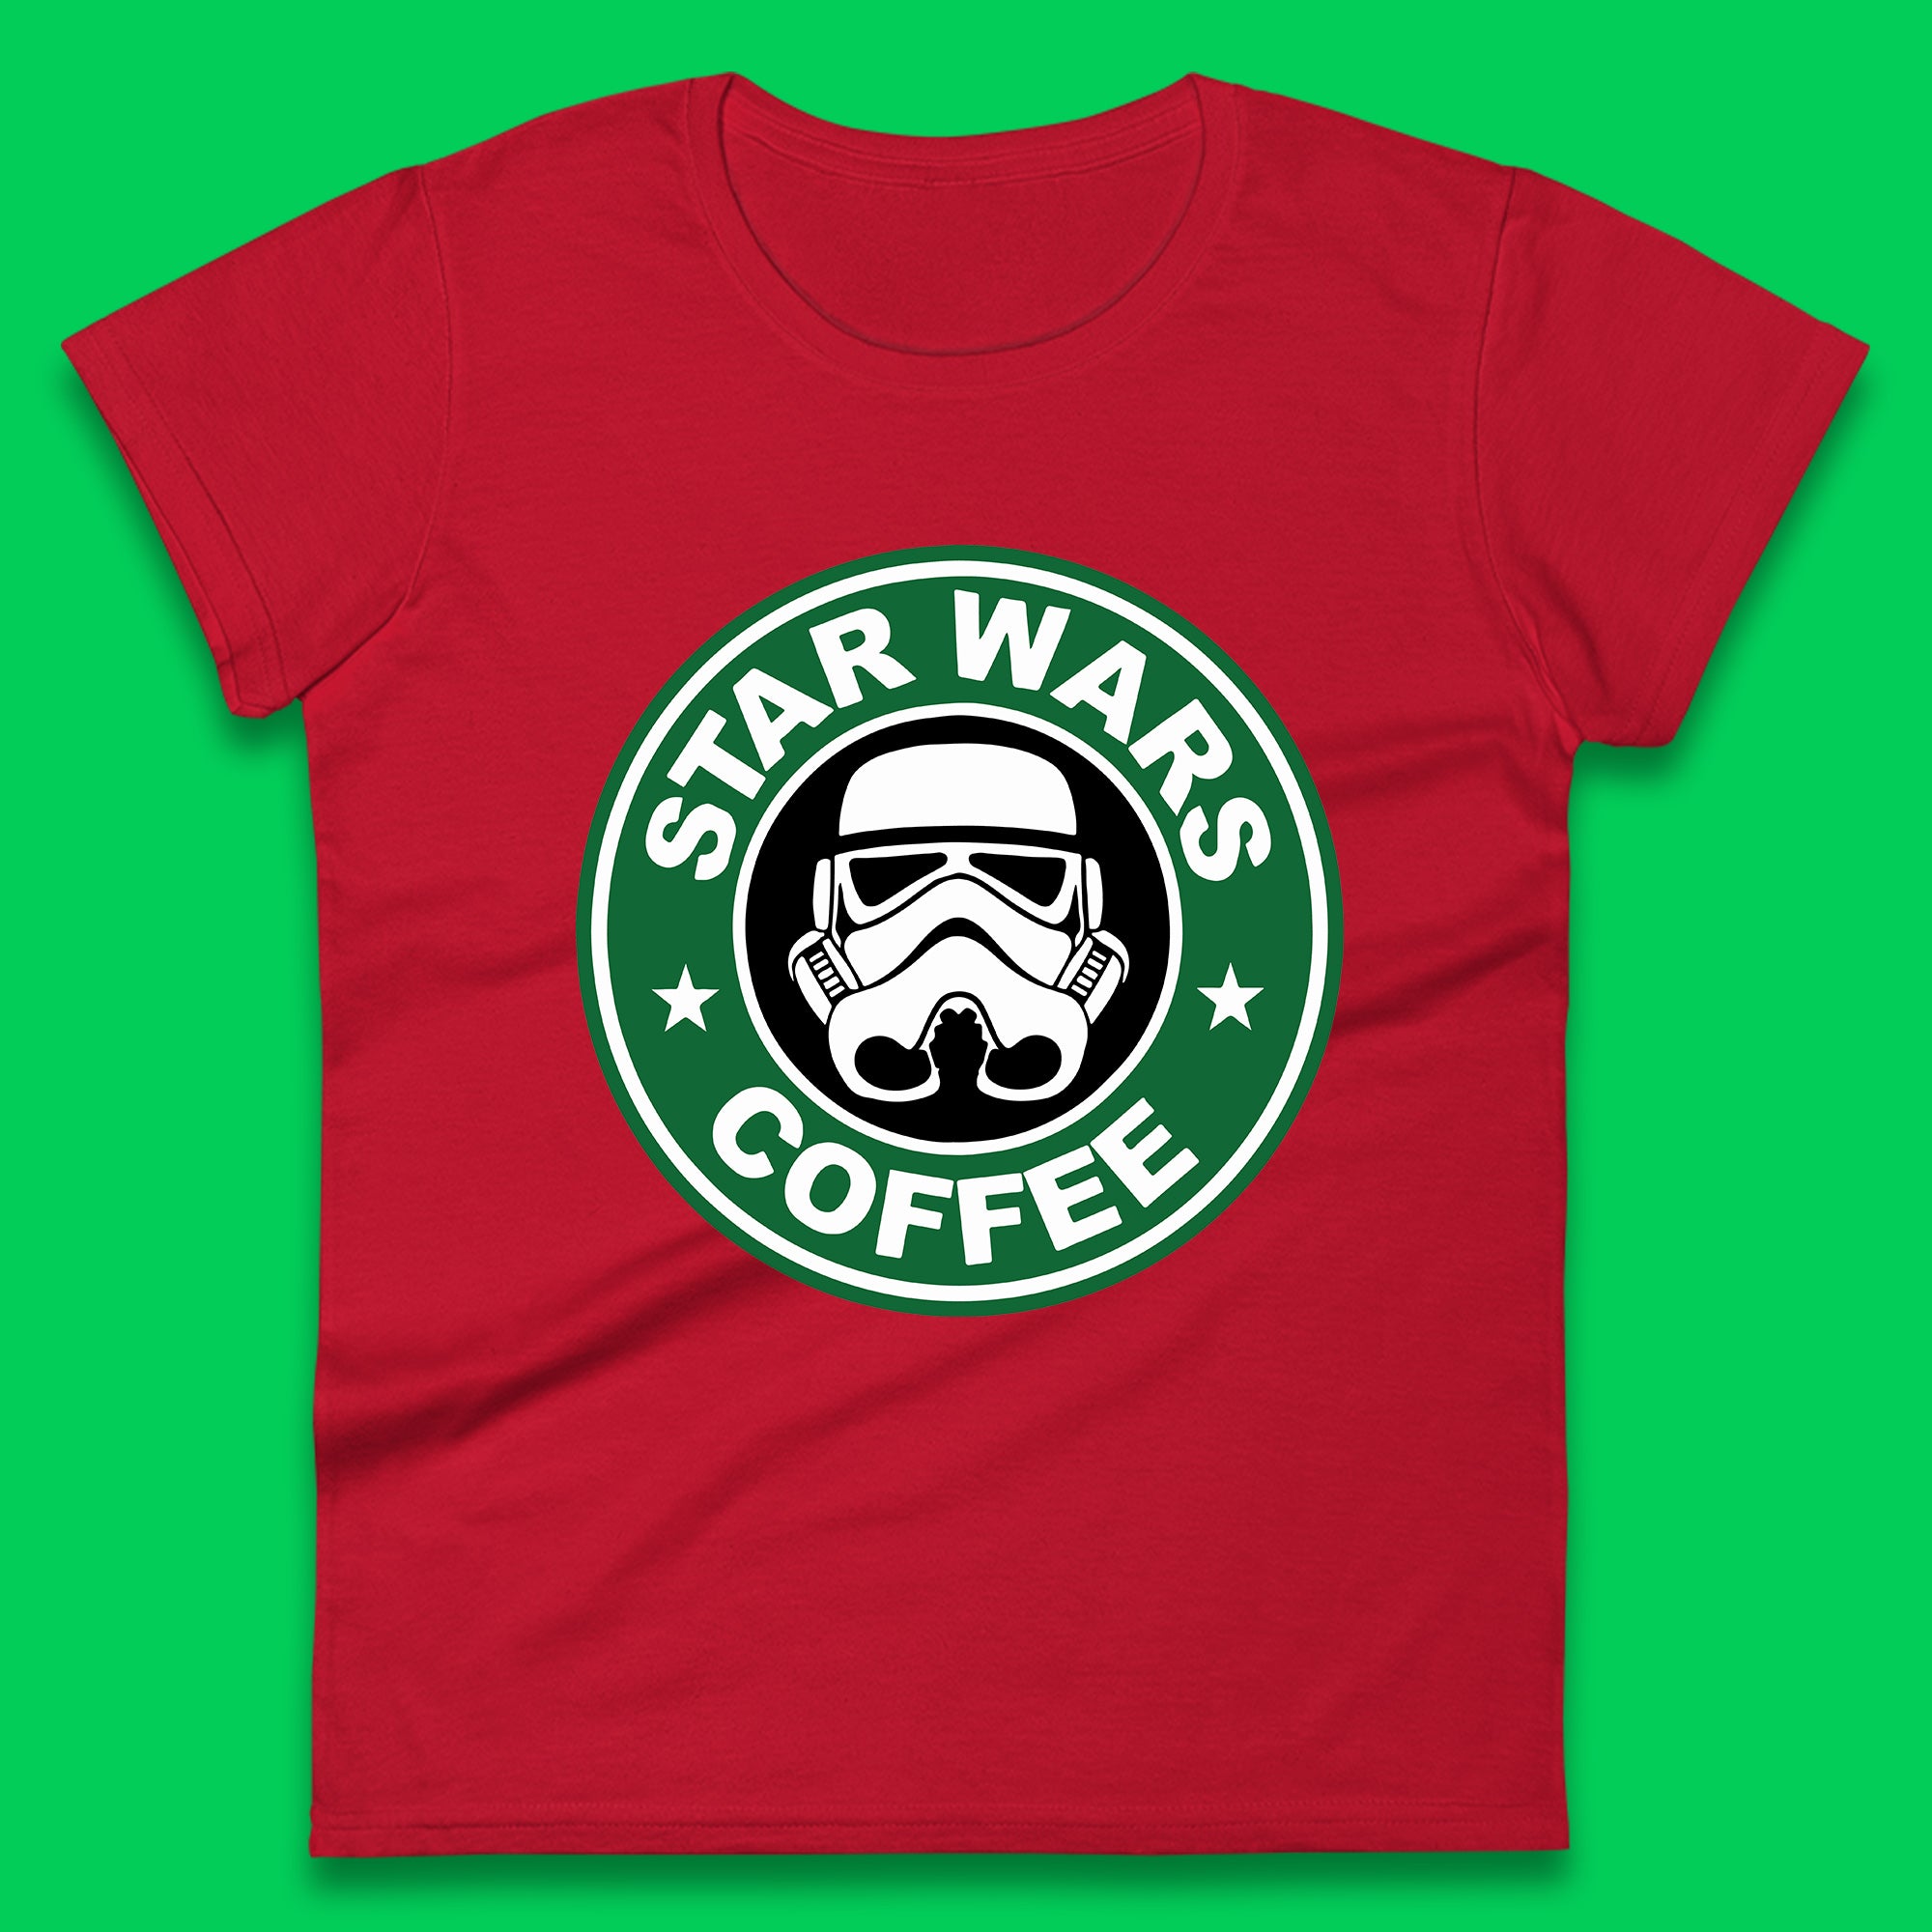 Star Wars Coffee Stormtrooper Sci-fi Action Adventure Movie Character Starbucks Coffee Spoof Star Wars 46th Anniversary Womens Tee Top